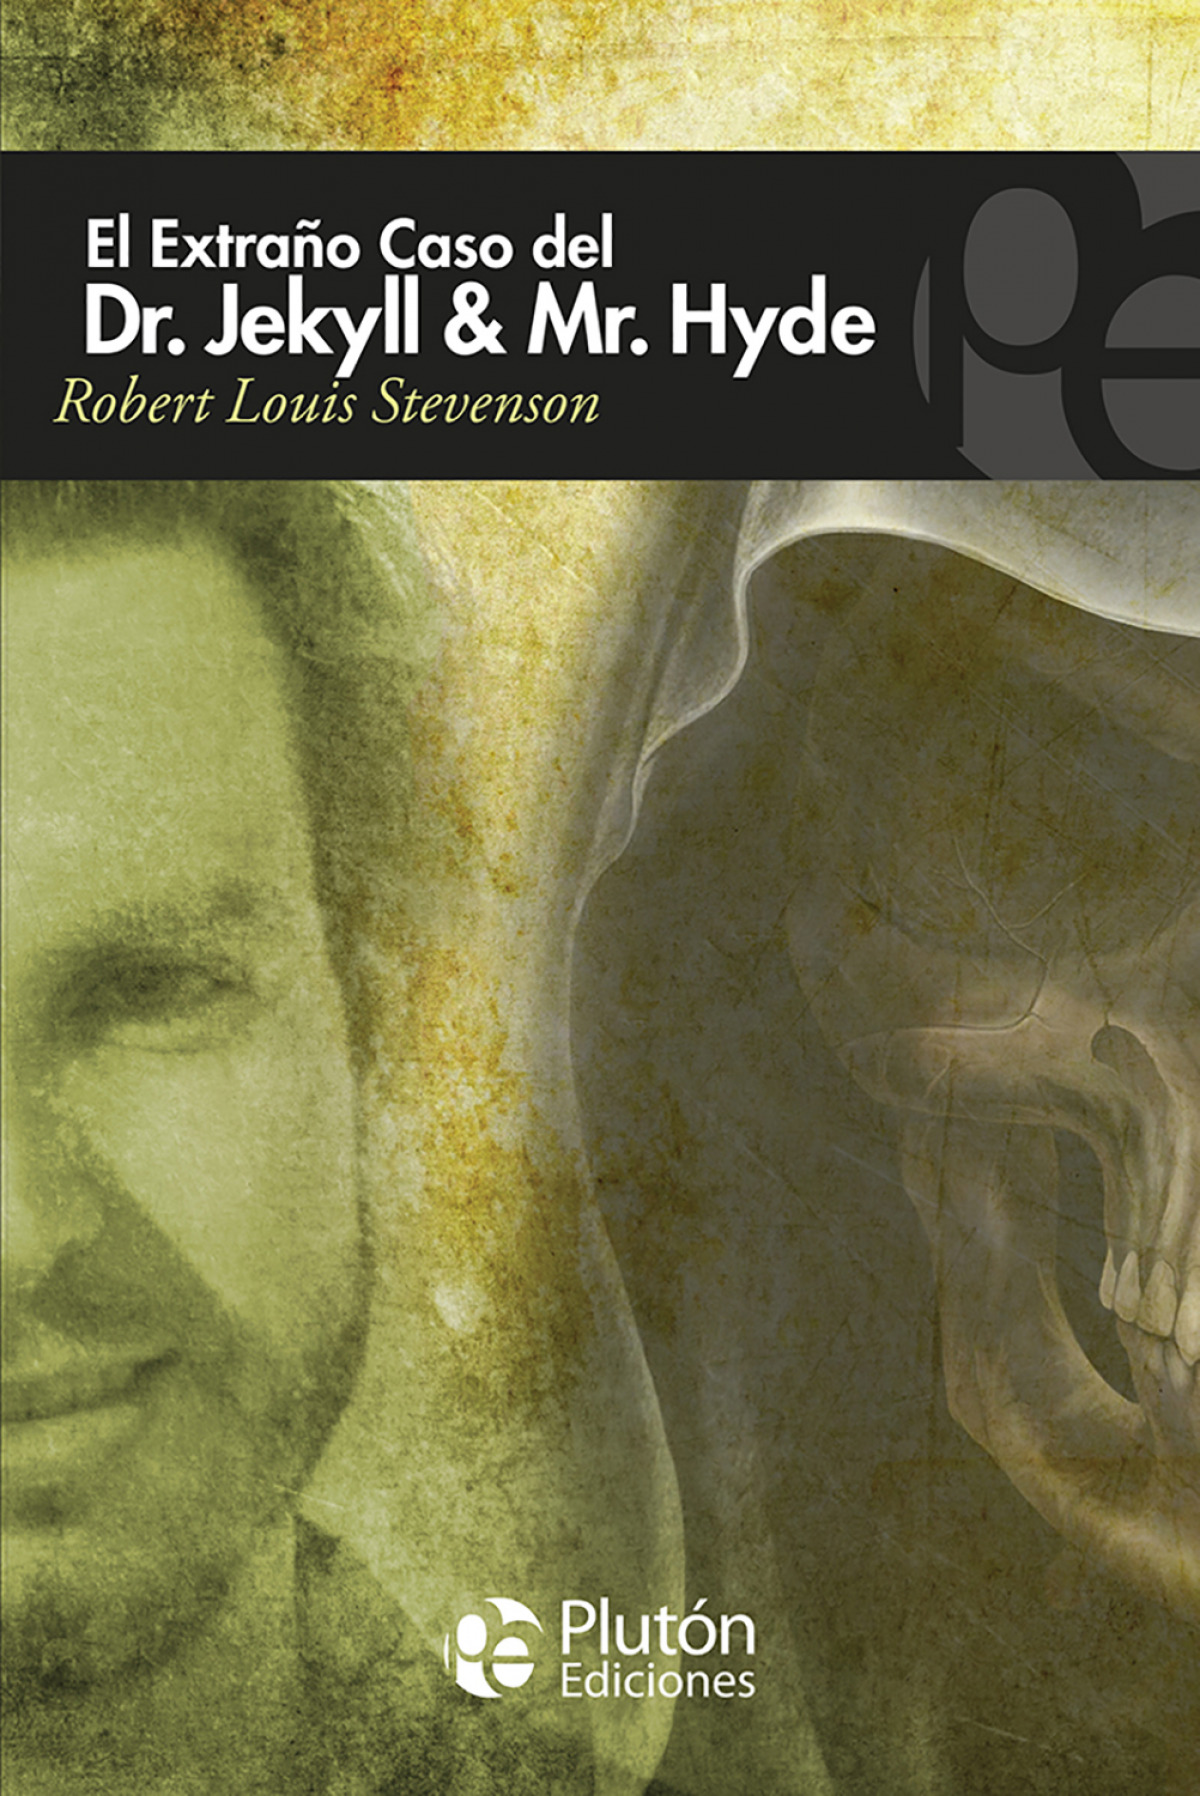 El dr. jekyll & mister hyde - Robert Louis Stevenson.